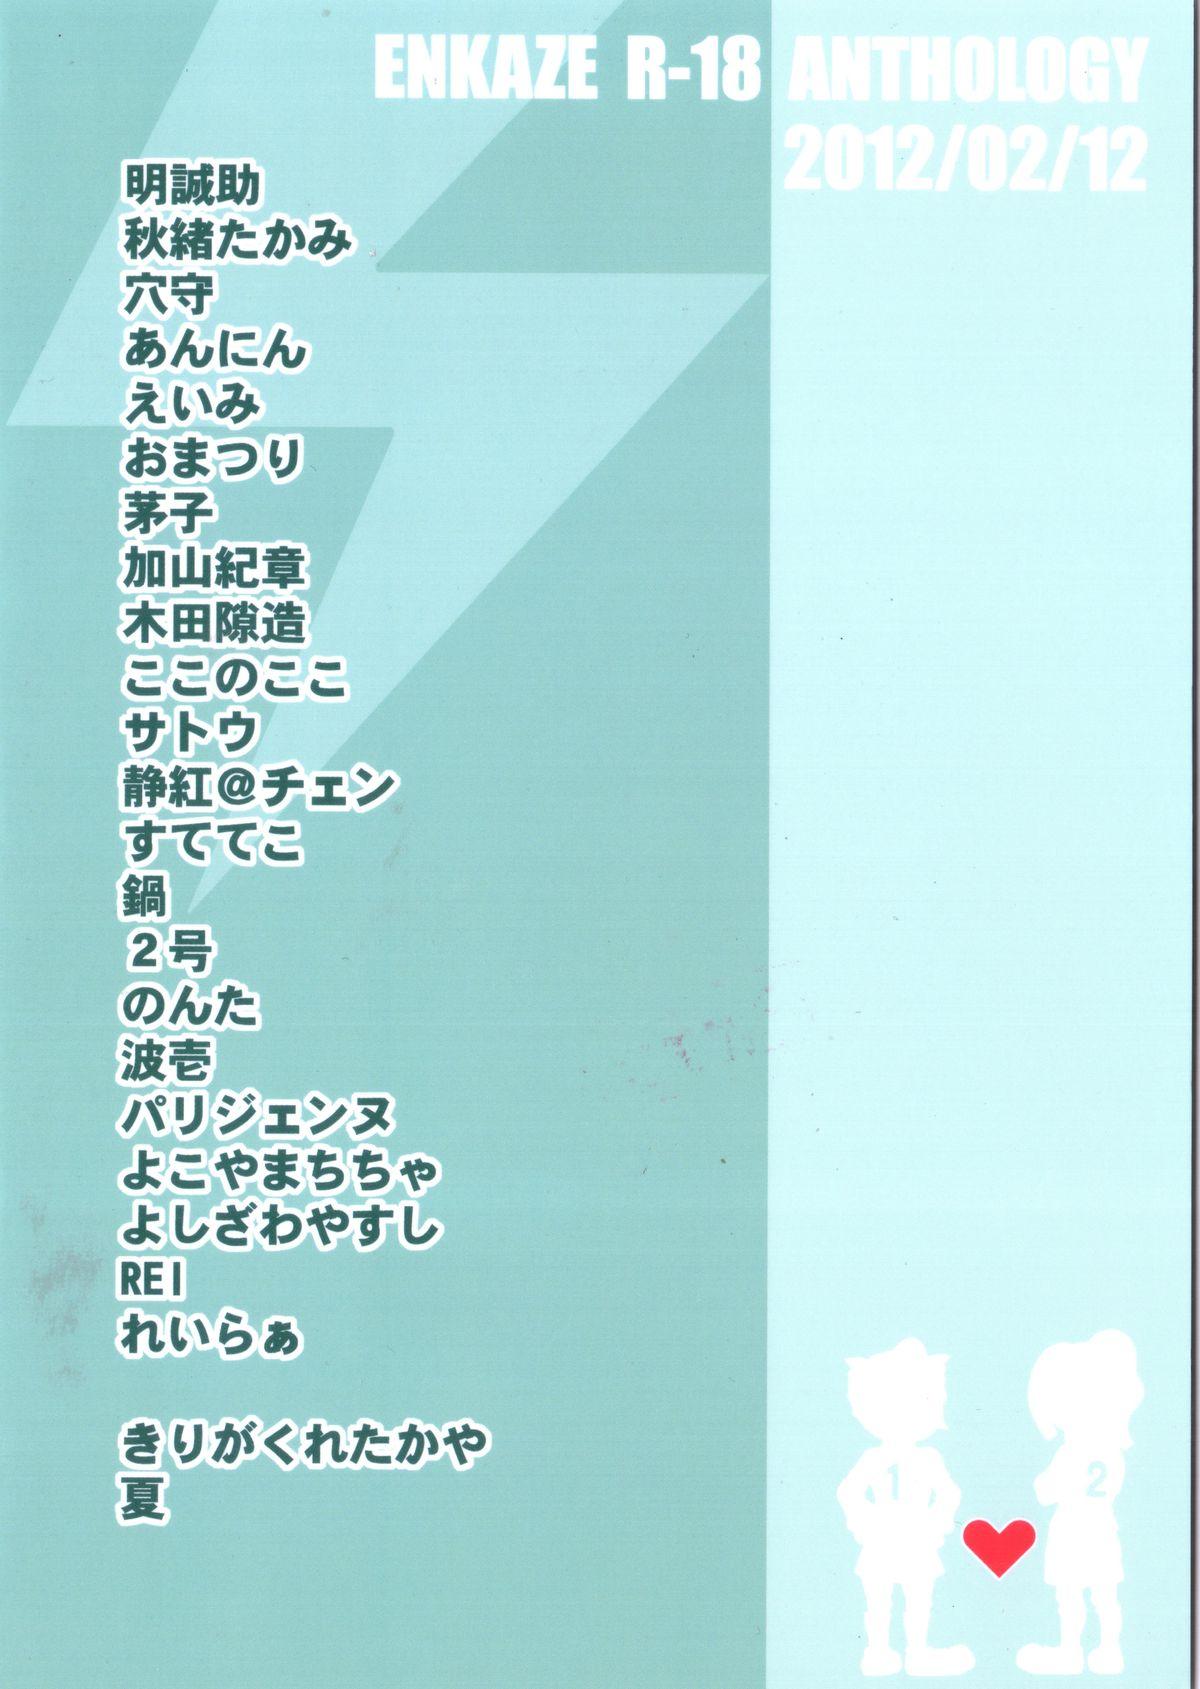 Gay Shaved Kirigakure Takaya (Aniki Otokodou) - ×××× Yarouze! (Inazuma Eleven) - Inazuma eleven Crazy - Page 2